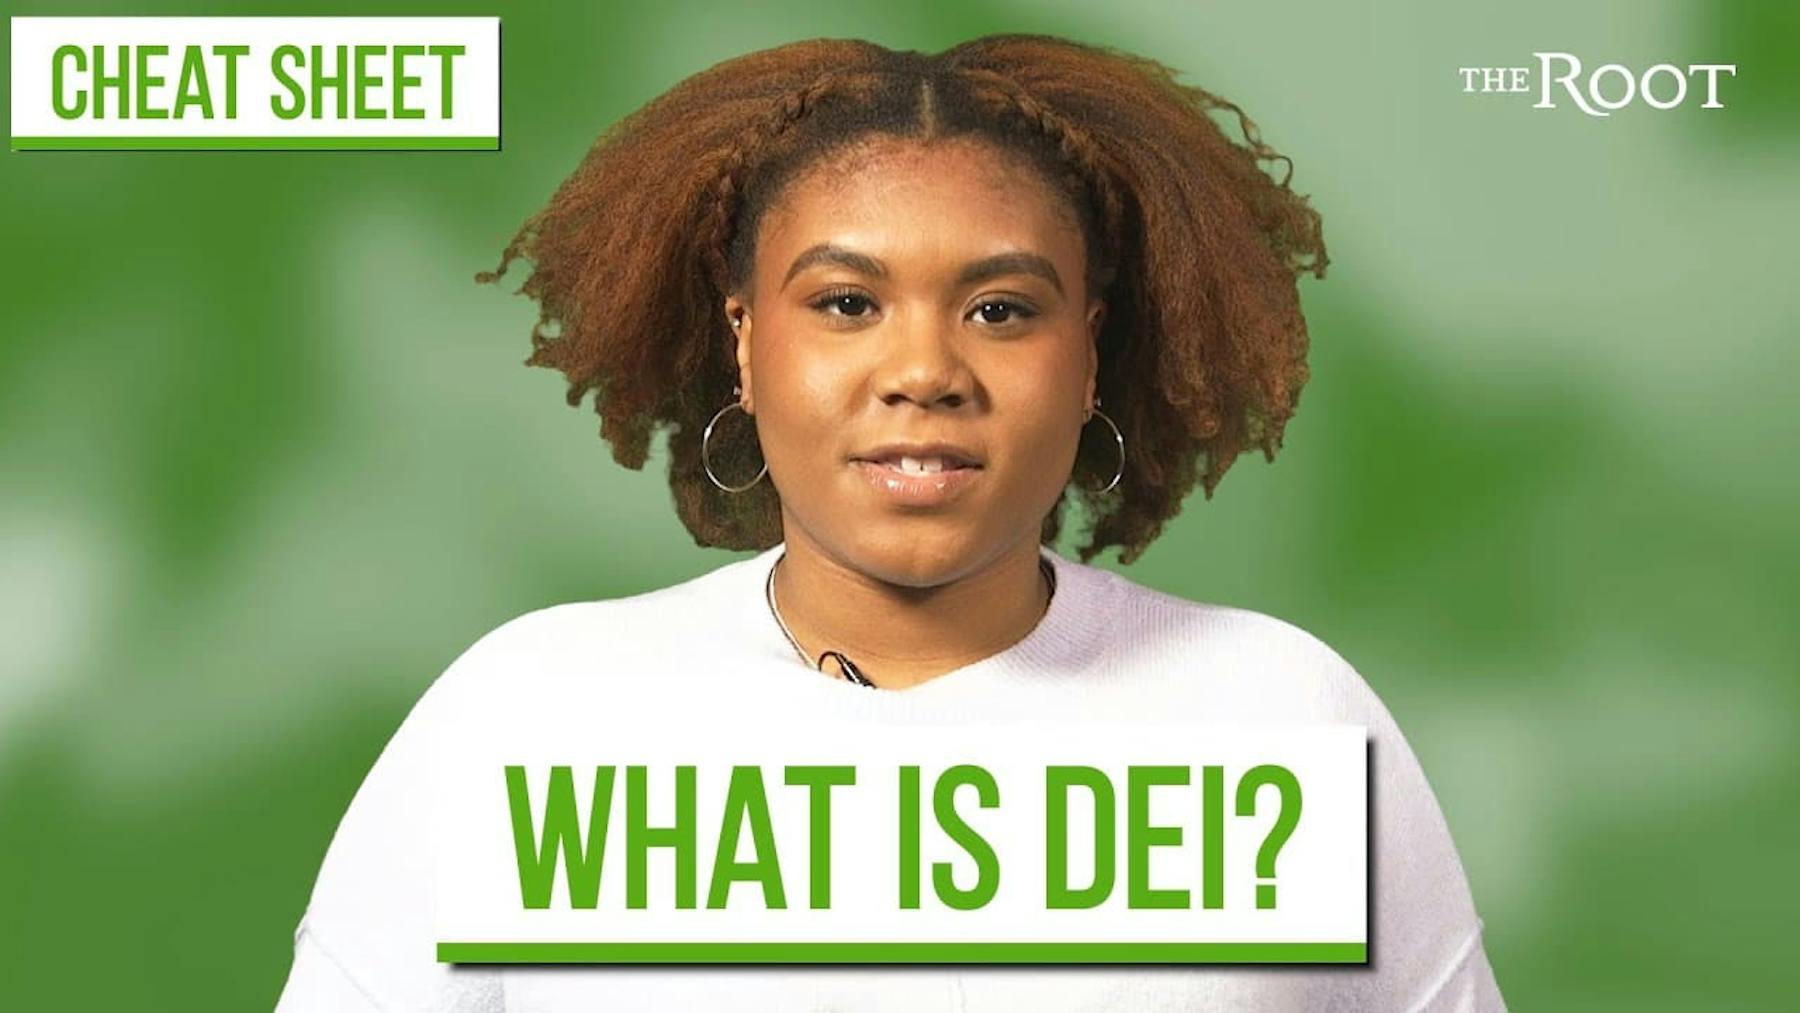 what is dei?